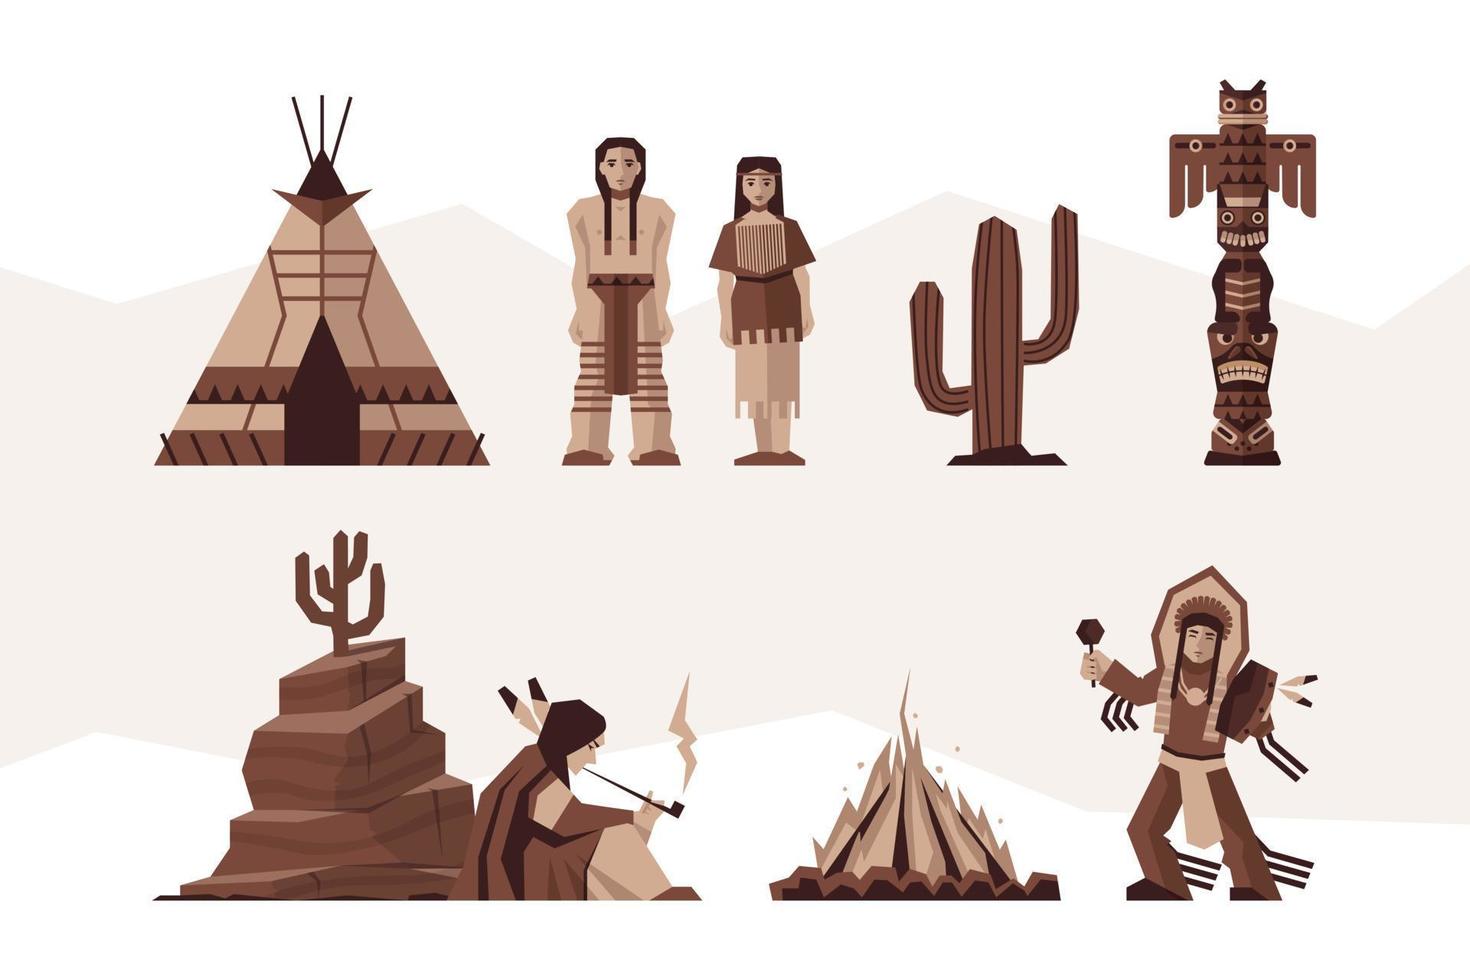 reeks van inheems Amerikaans gestileerde tekens in traditioneel kleren, Tipi tent, totem en kampvuur. vector